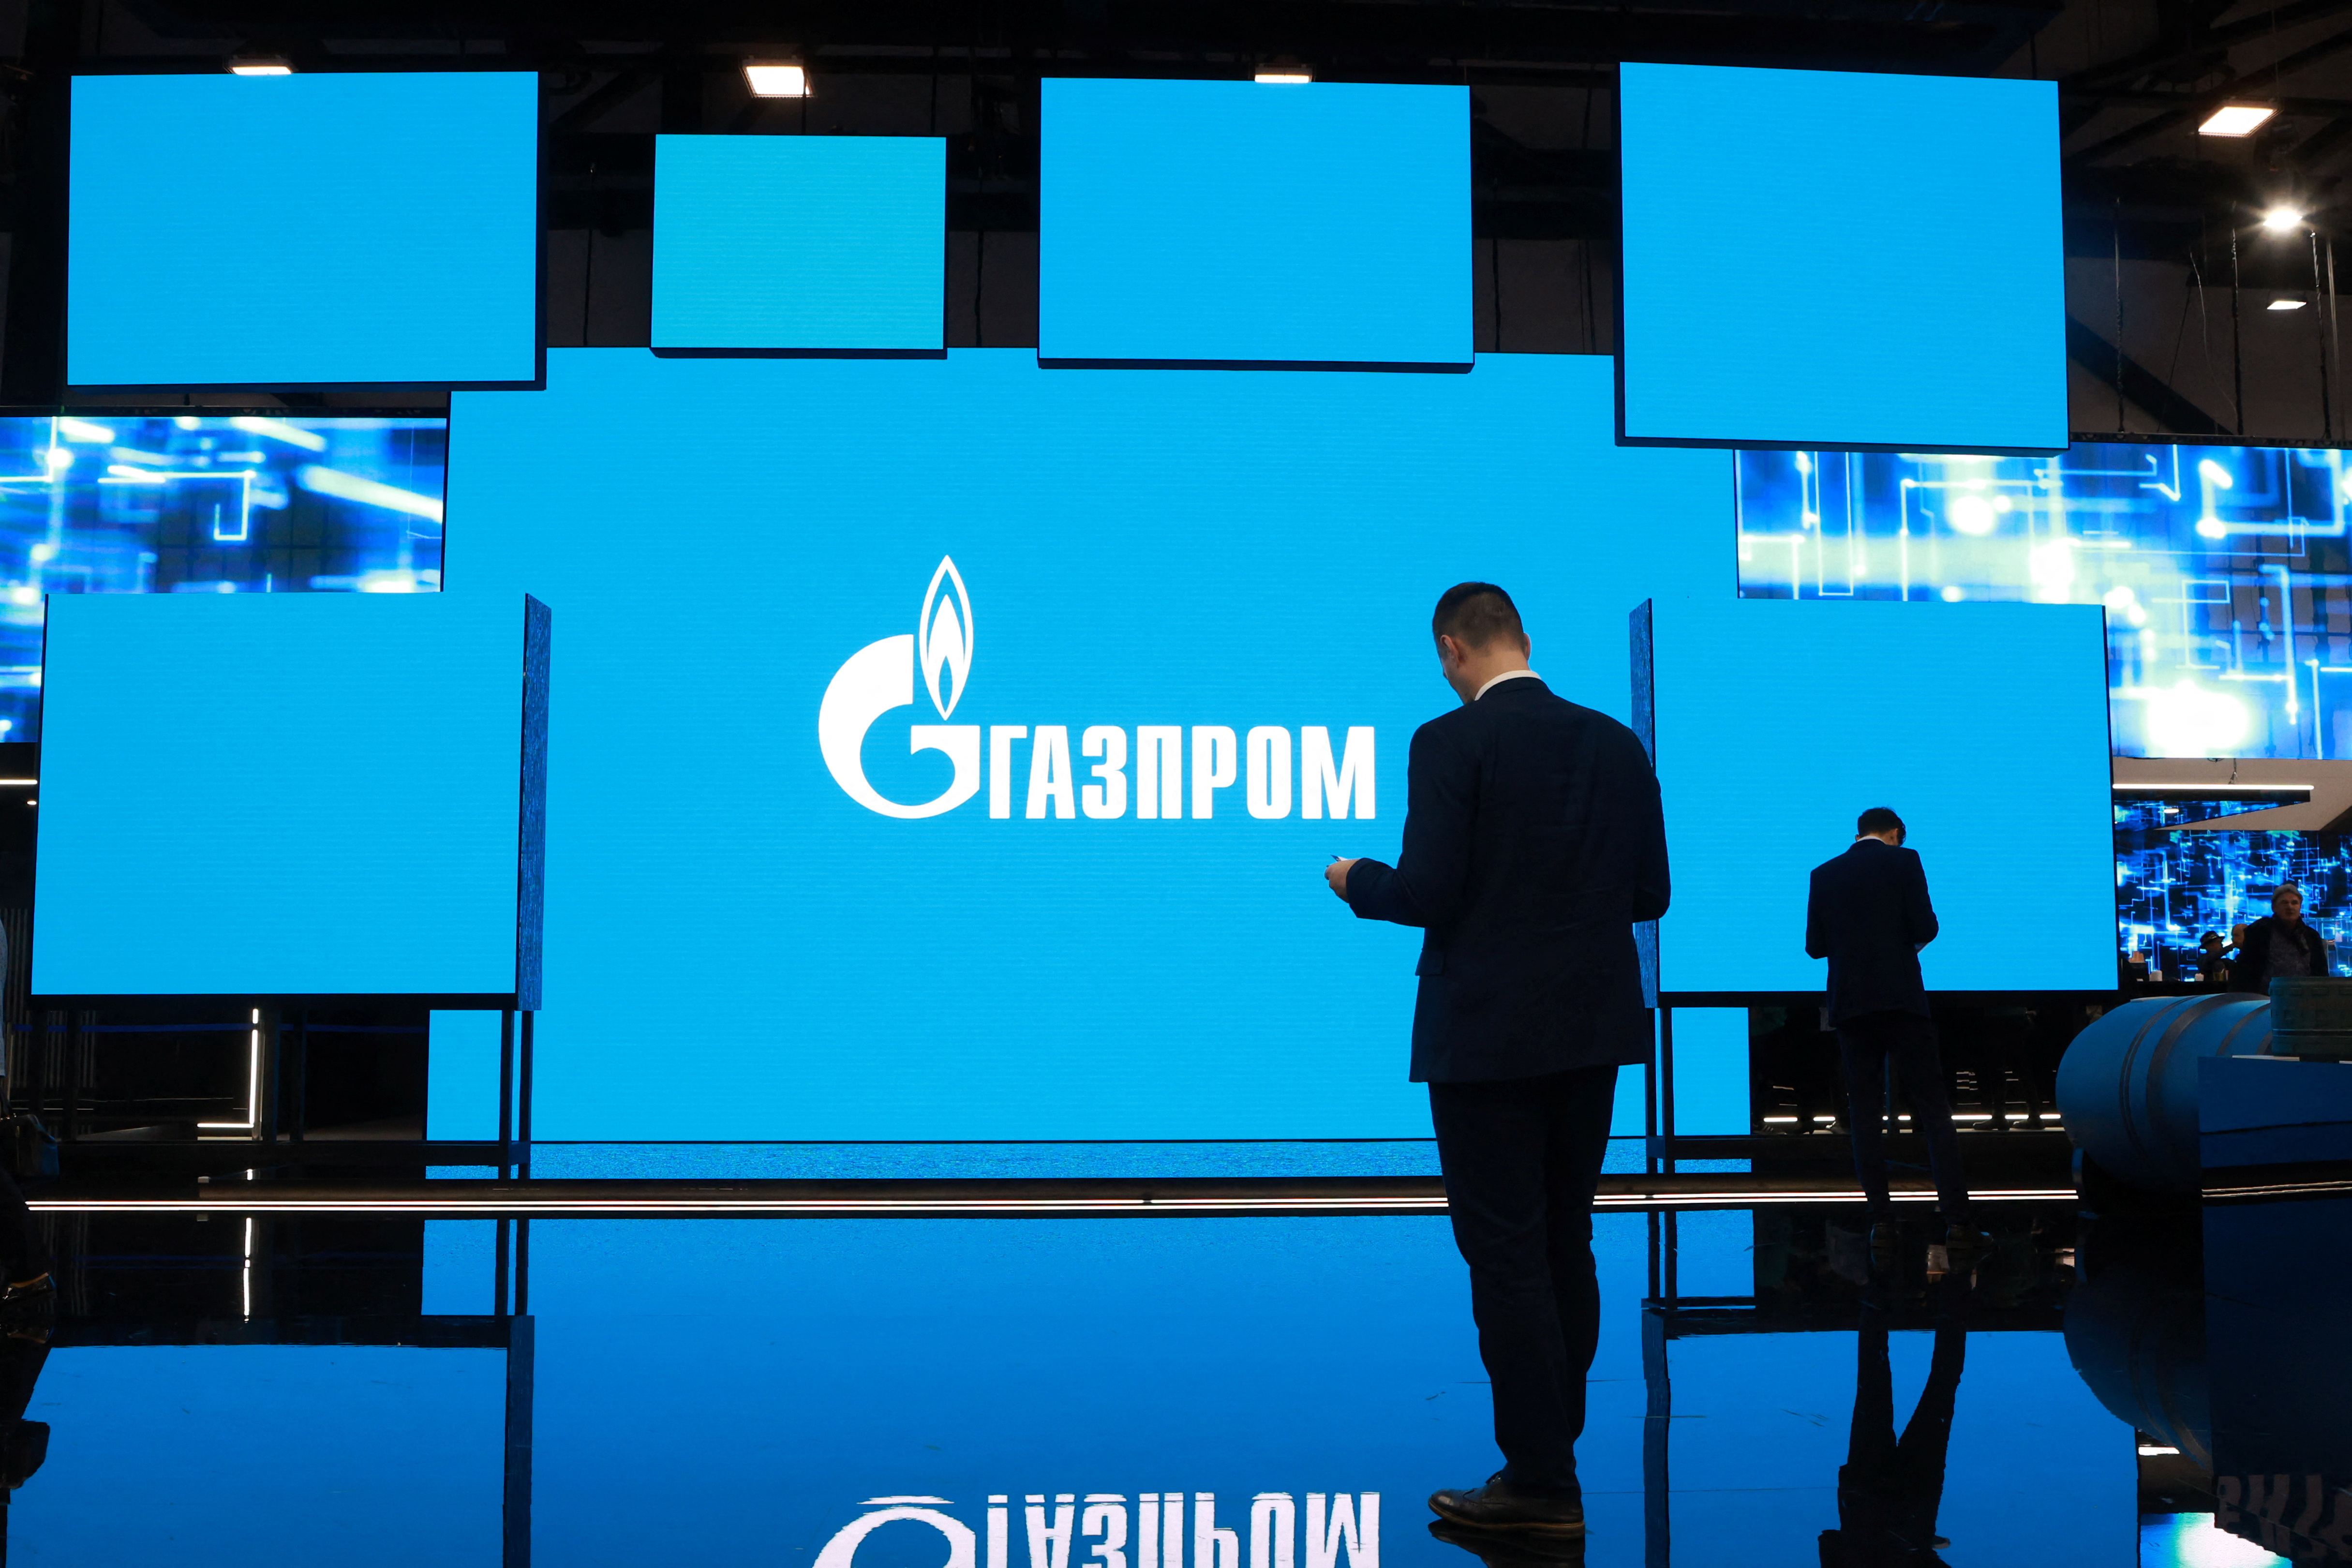 The logo of Gazprom is displayed on a screen during the Saint Petersburg international gas forum in Saint Petersburg